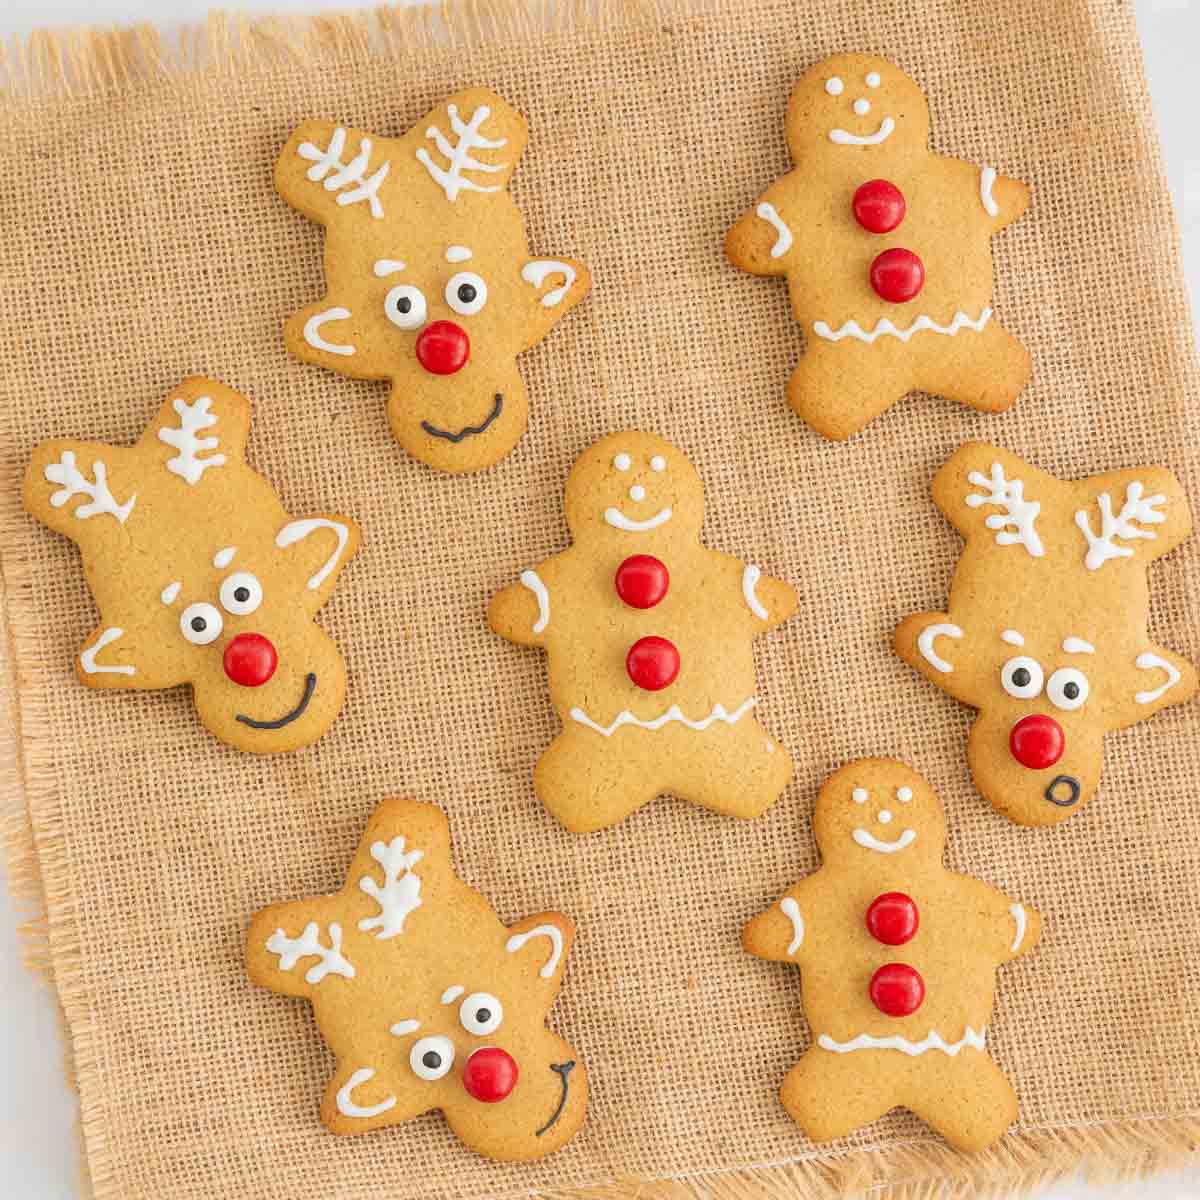 Gingerbread cookies and reindeer cookies sitting on a brown hessian cloth. 